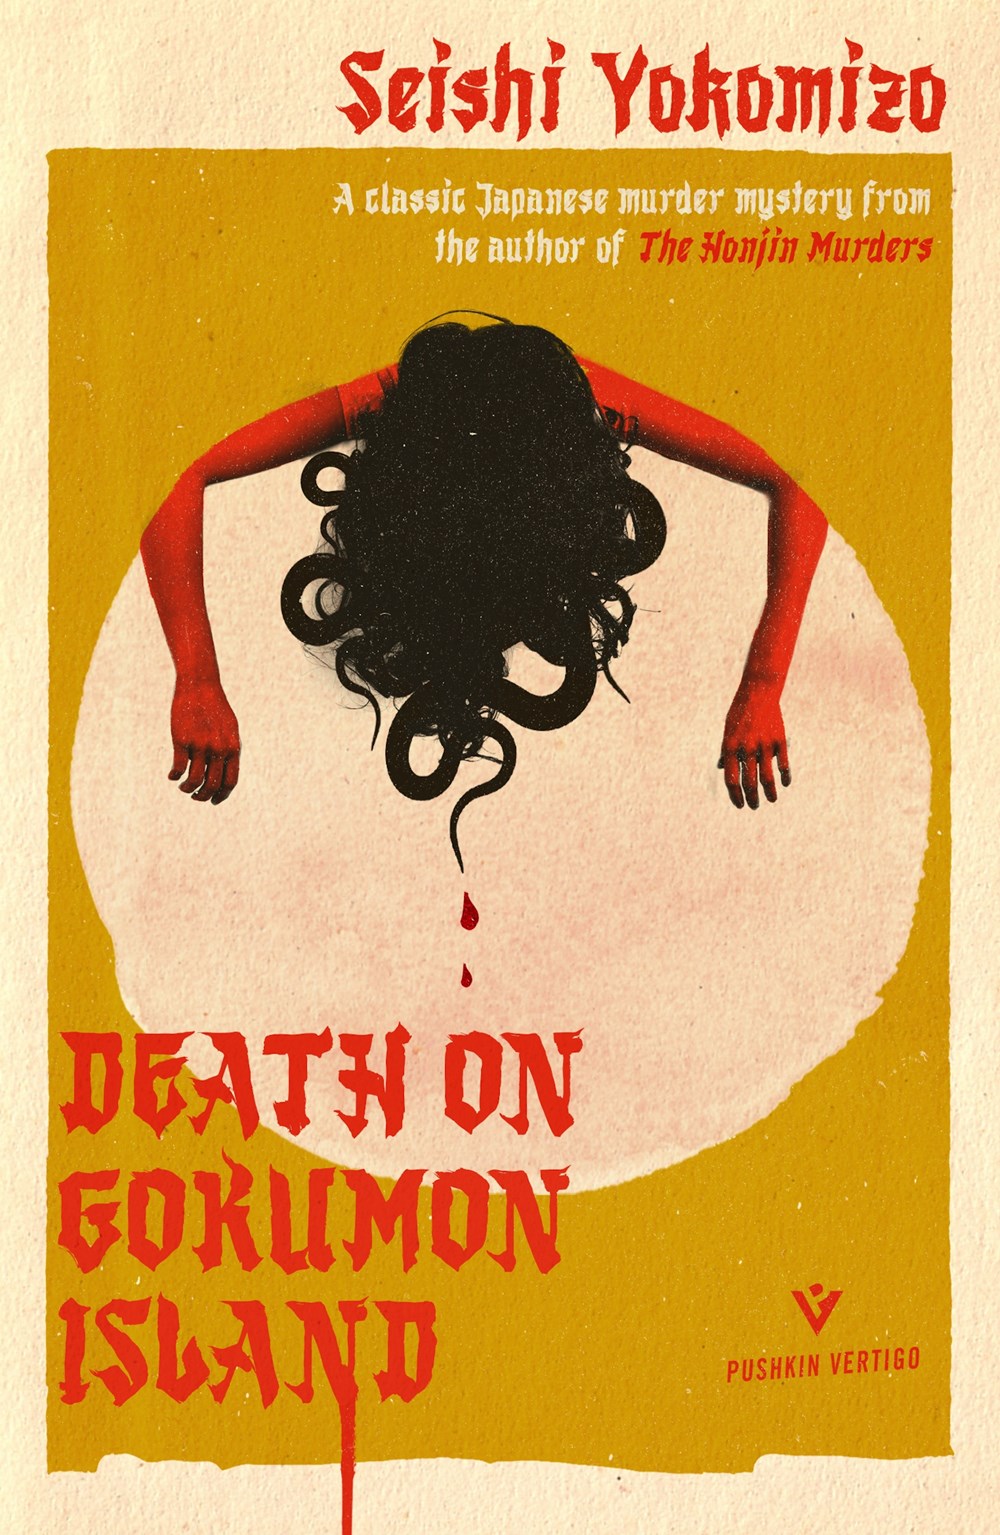 Death on Gokumon Island by Seishi Yokomizo, translated by Louise Heal Kawai